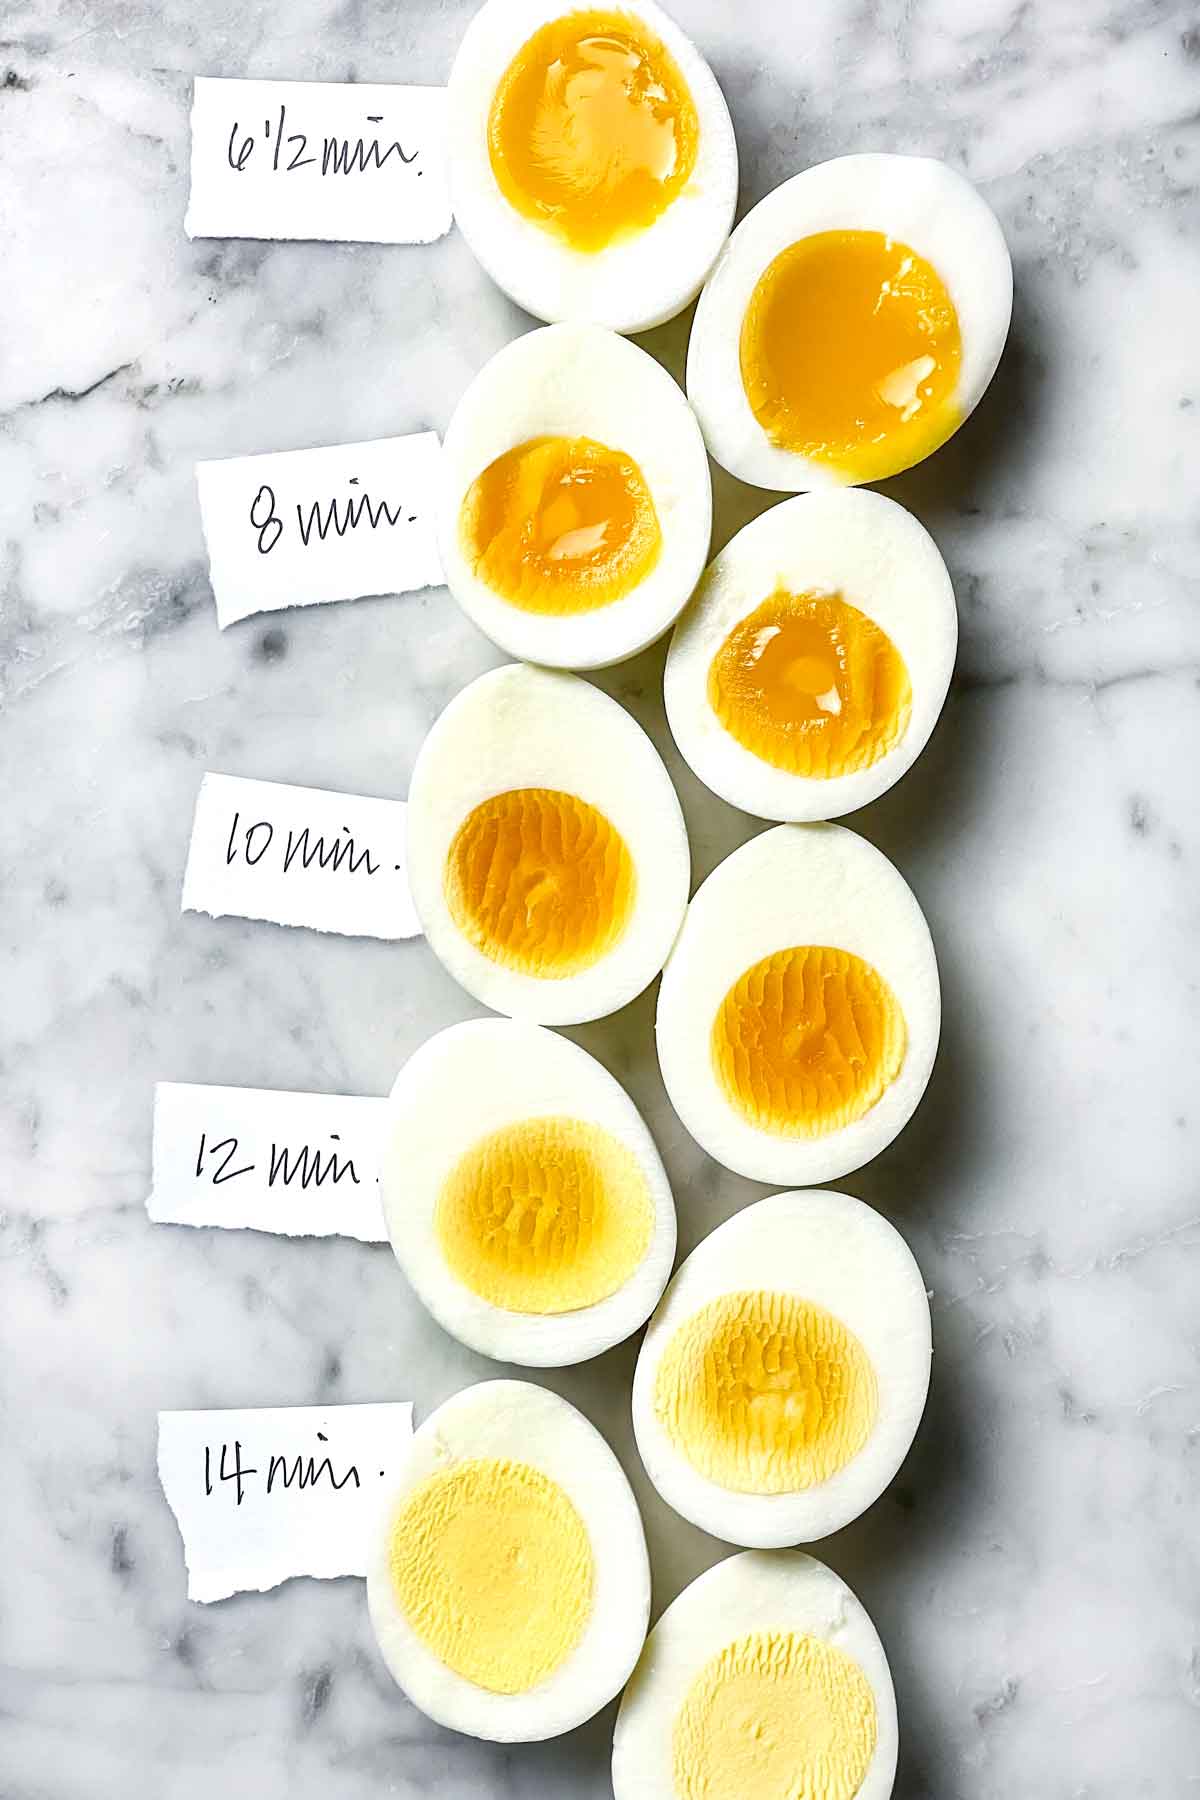 Hard Boiled Eggs Foodiecrush.com 3 